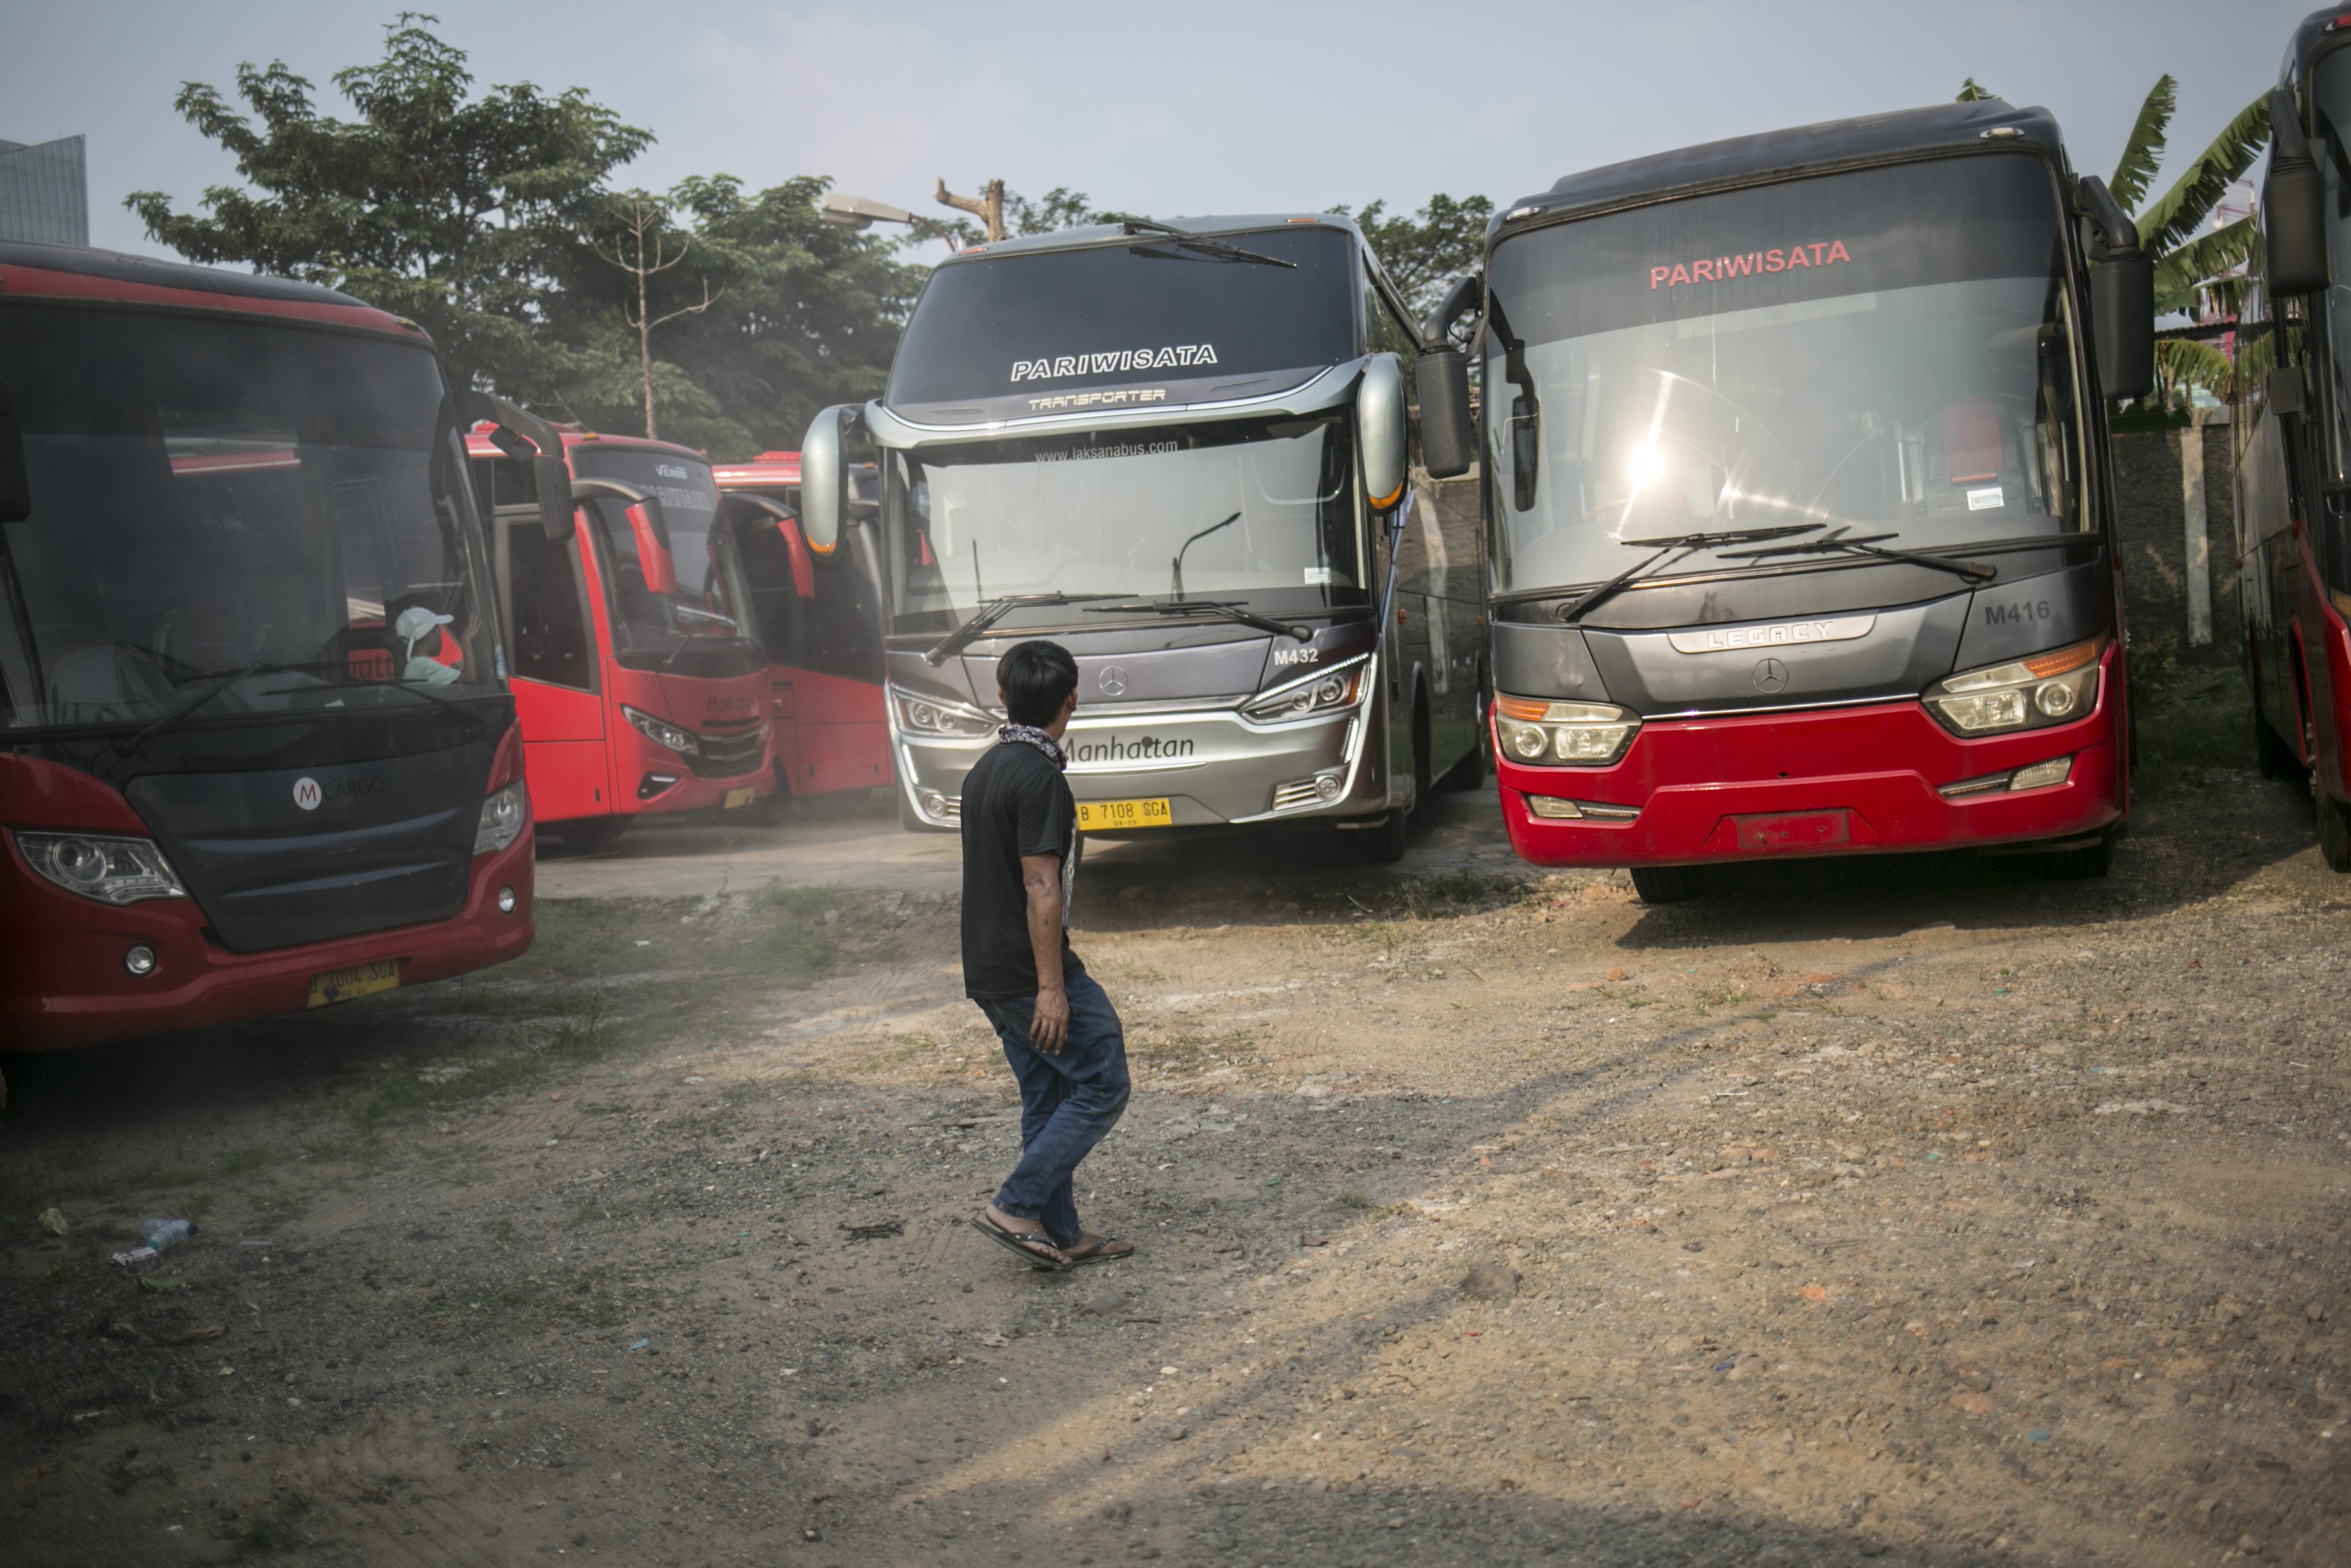 Sejumlah bus terparkir di salah satu pool bus pariwisata di kawasan Tanjung Barat, Jagakarsa, Jakarta, Selasa (28/7/2020). Masih diberlakukannya Pembatasan Sosial Bersekala Besar (PSBB) dan penutupan tempat rekreasi akibat Covid-19, berimbas pada jasa transportasi pariwisata. Sejak bulan Maret pengelola mengaku mengalami penurunan pendapatan dan penyewaan bus hingga 80%.